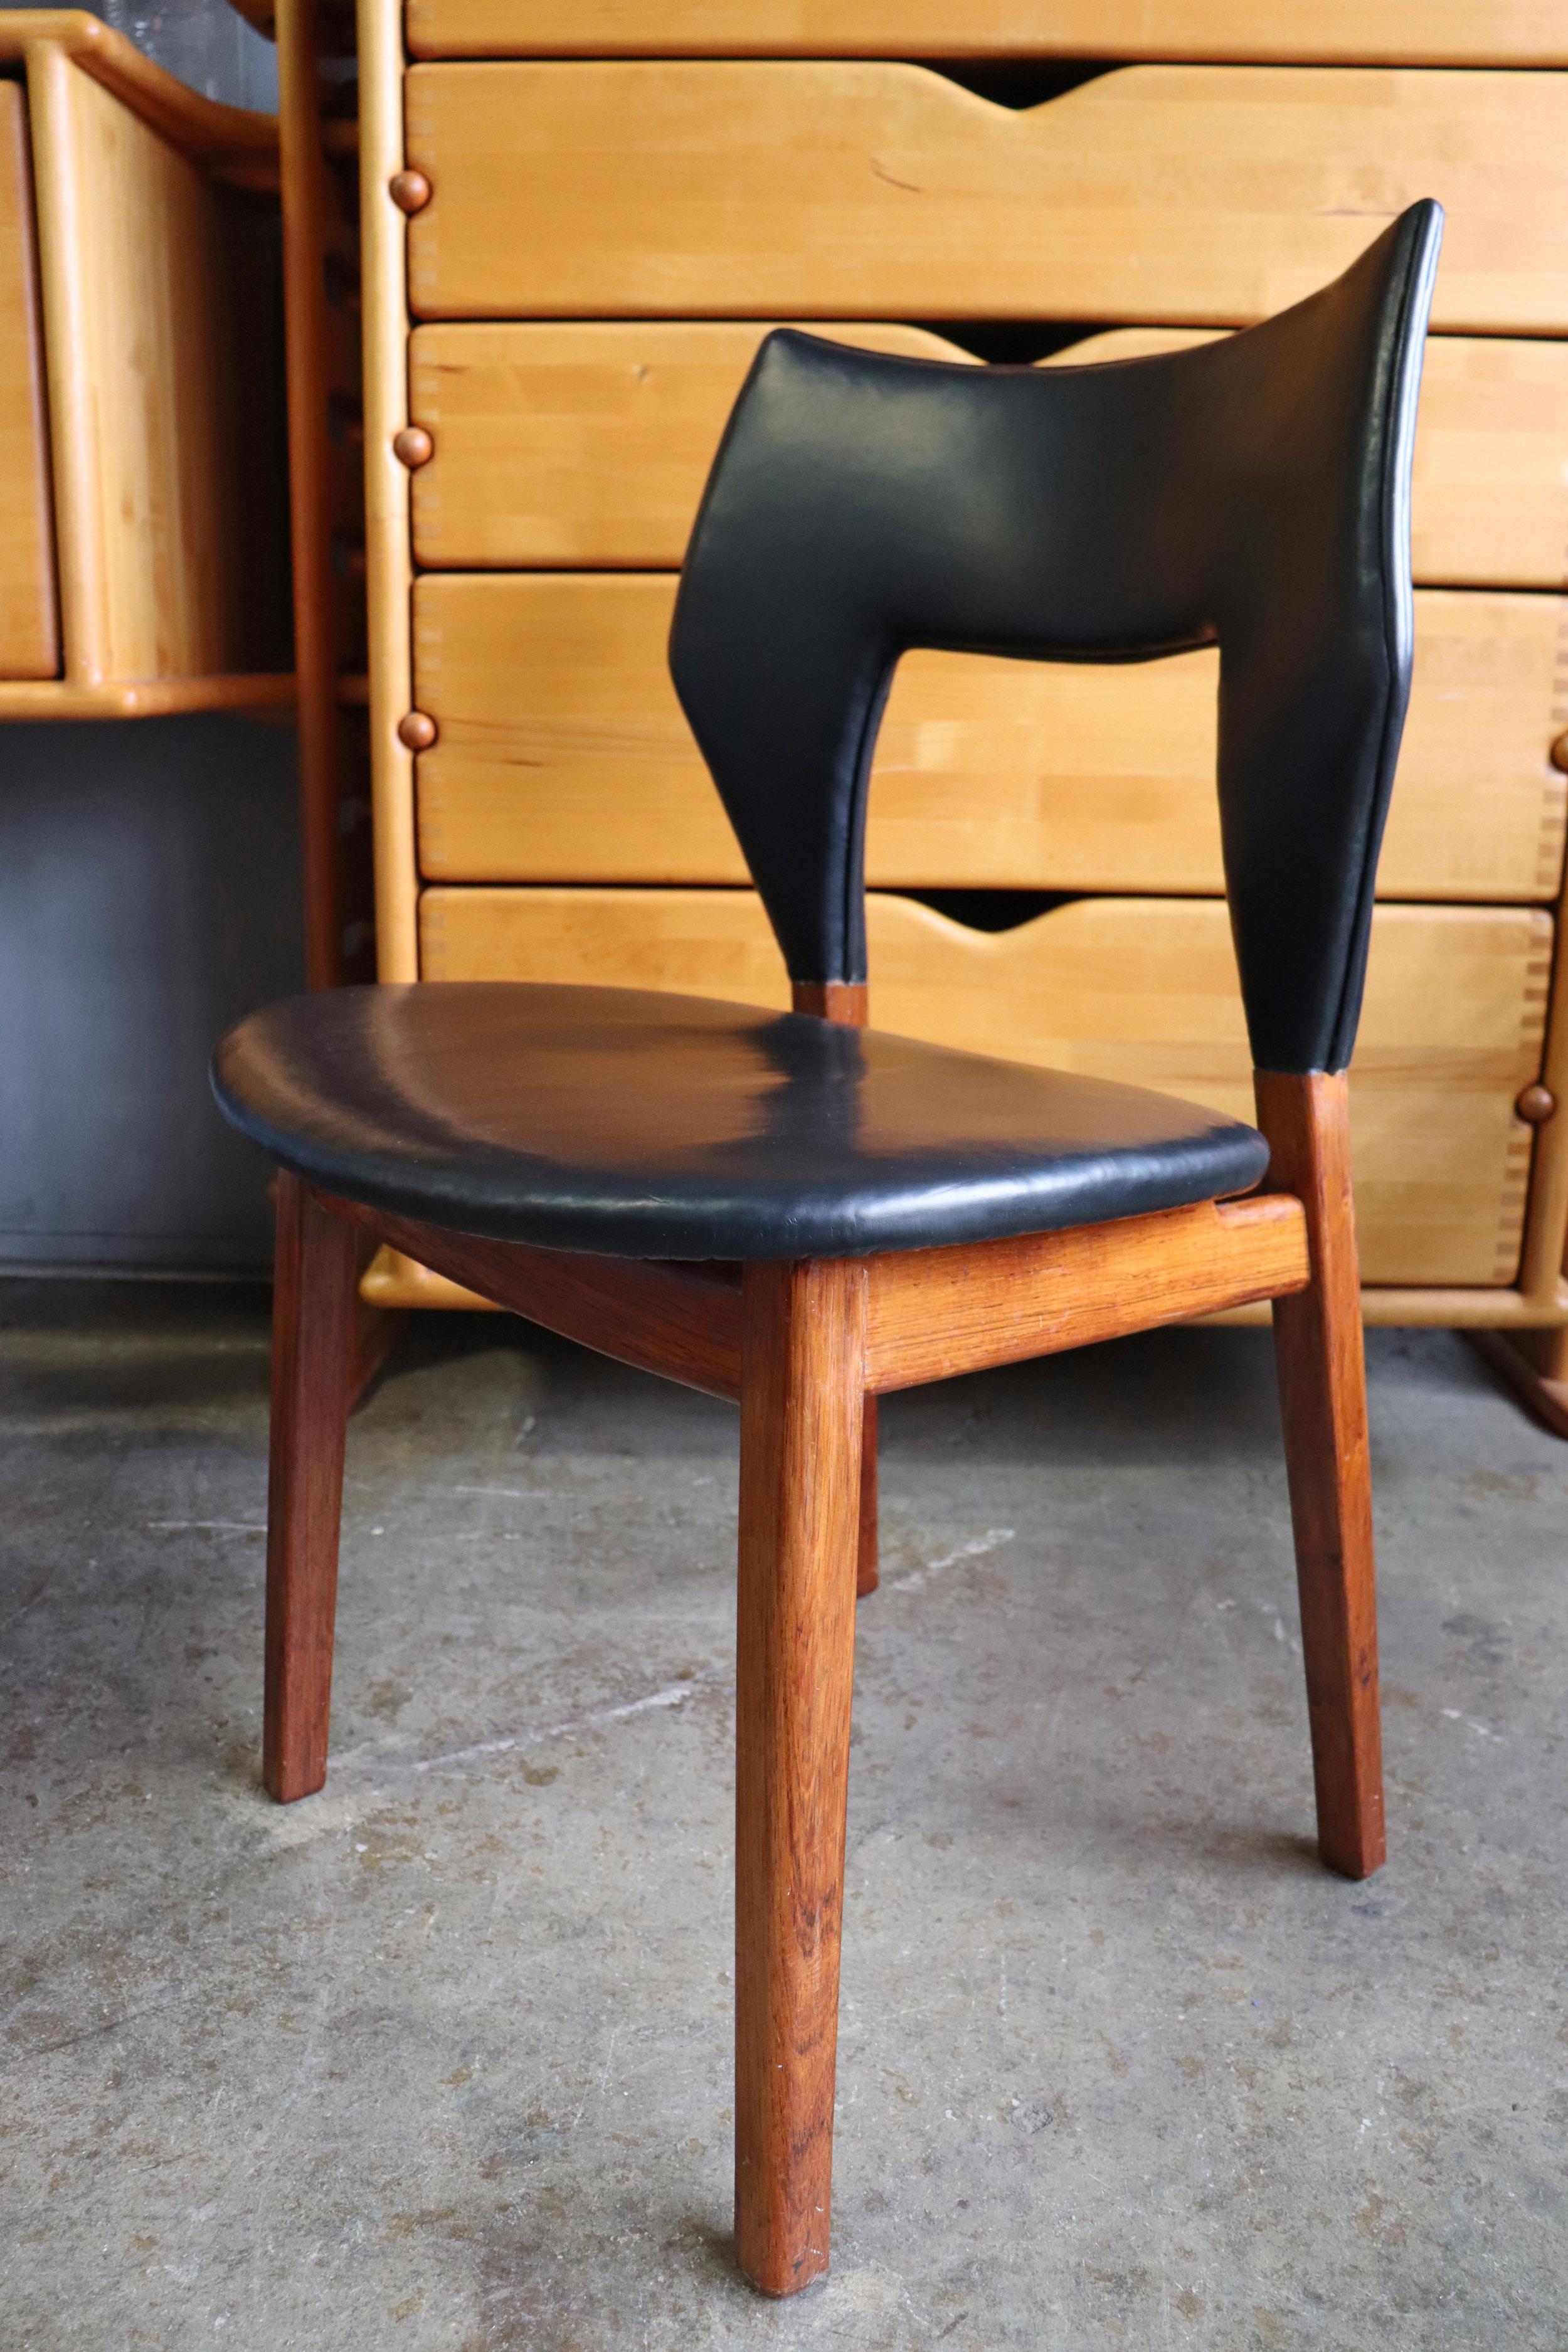 Tove & Edvard Kindt-Larsen Rosewood Chair for Thorald Madsens 3